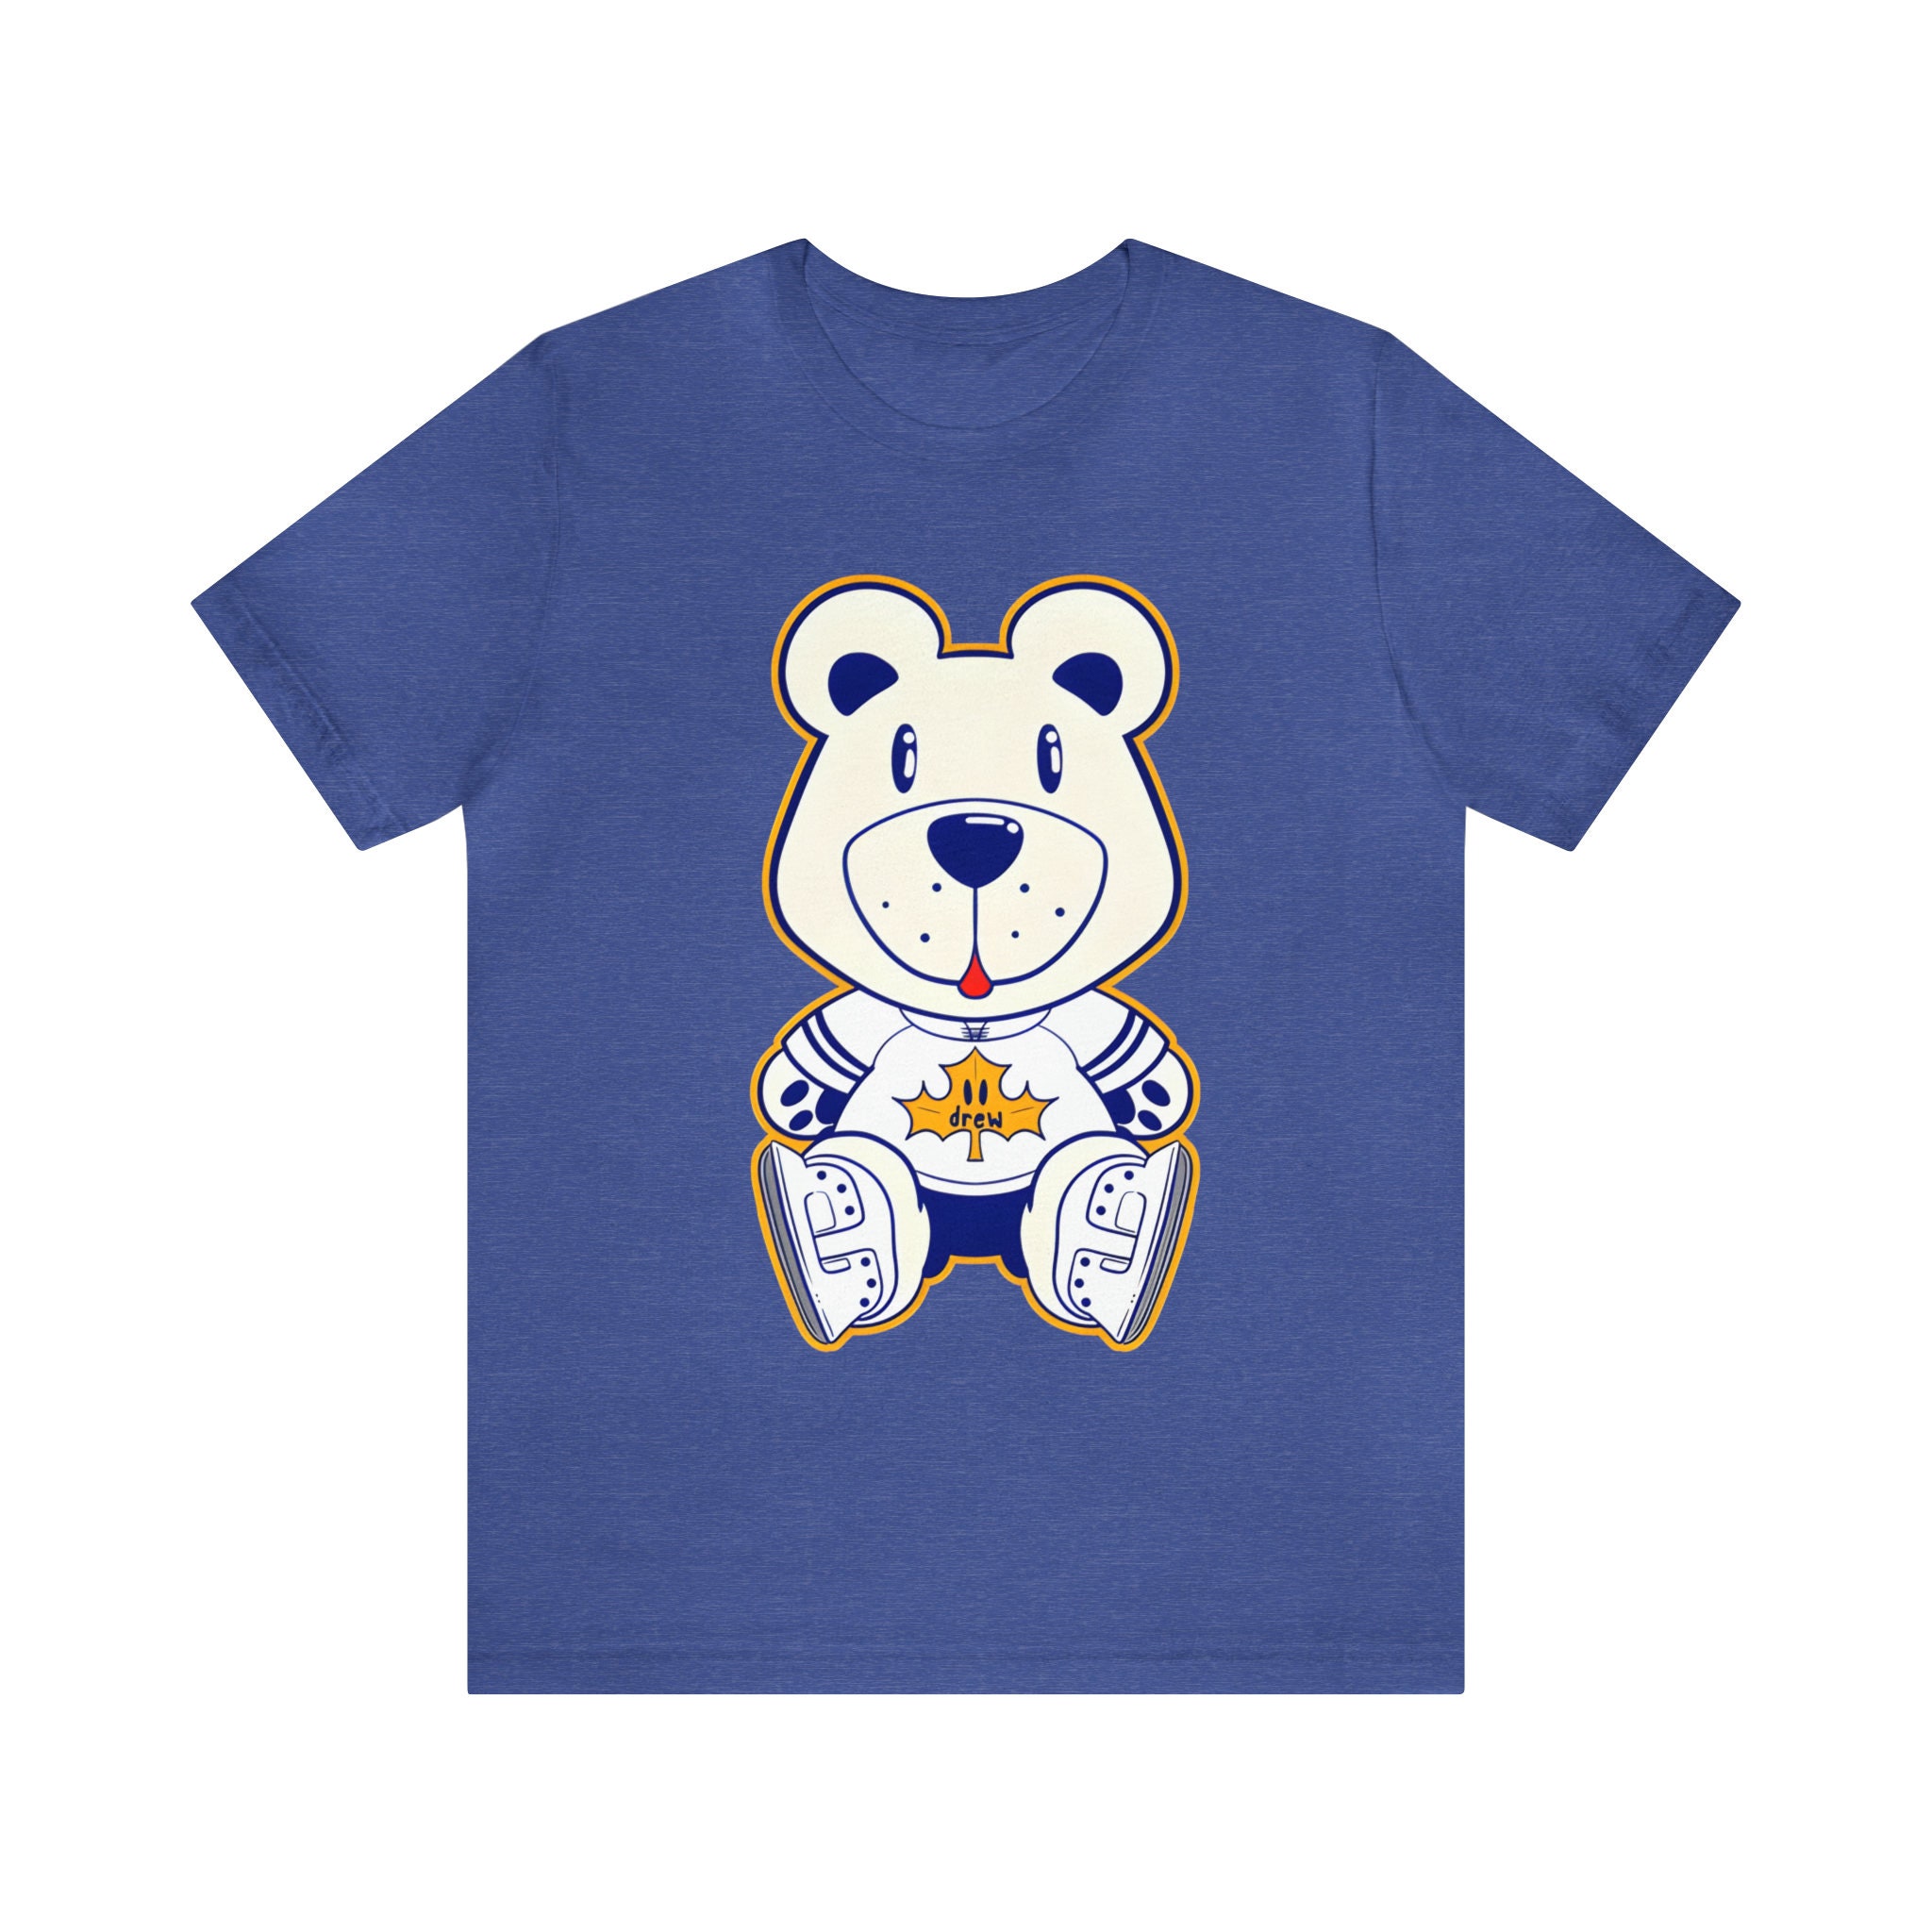 Drew House Teddy Bear X Toronto Maple Leafs T-Shirt 